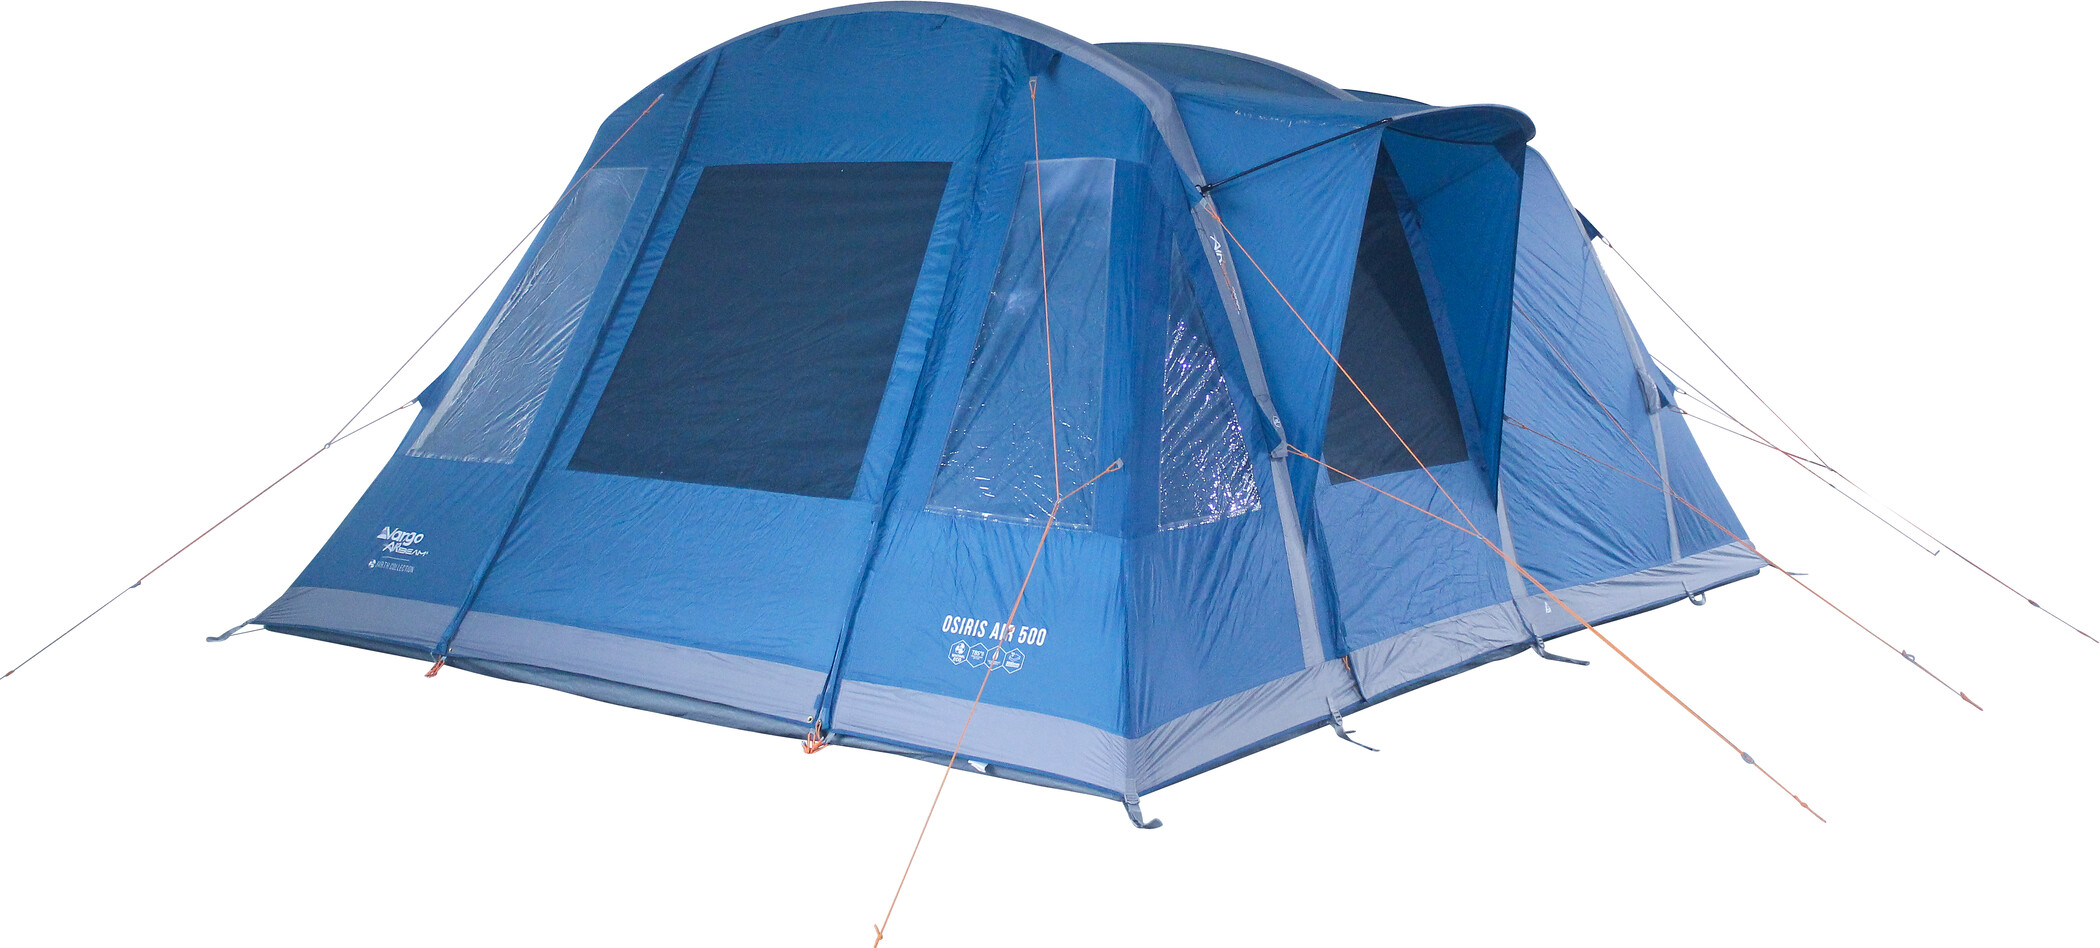 Vango Voyager 300 Zelt 3 Personen Zelt Campingzelt 290x200x135 cm blau 